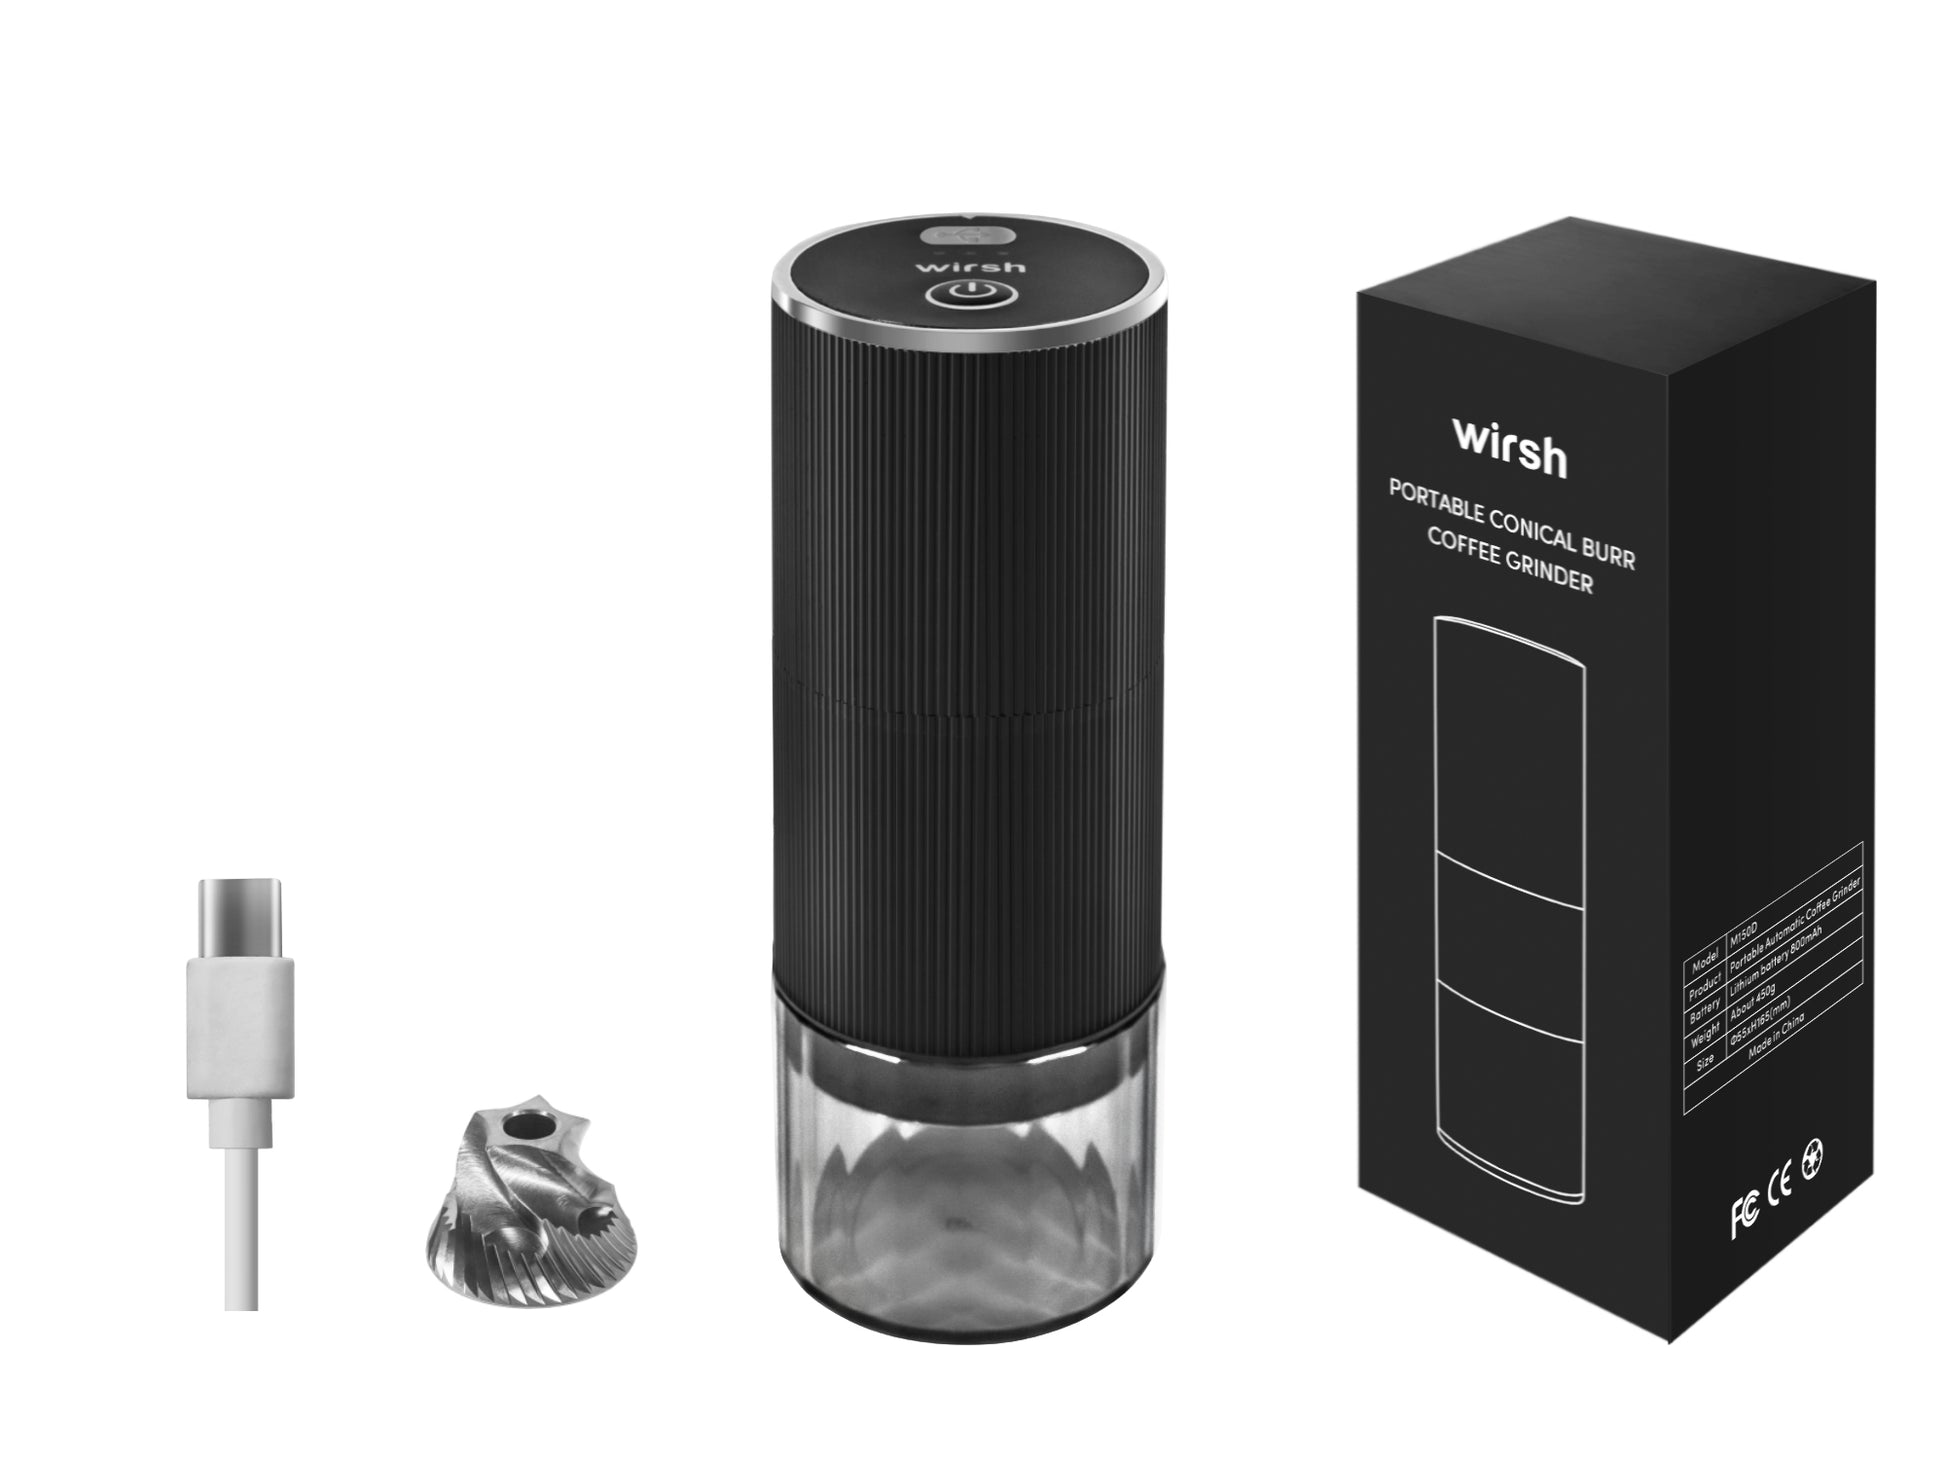 <img src="coffee grinder.jpg" alt="wirsh handle eletric burr coffee grinder with gift box"/>